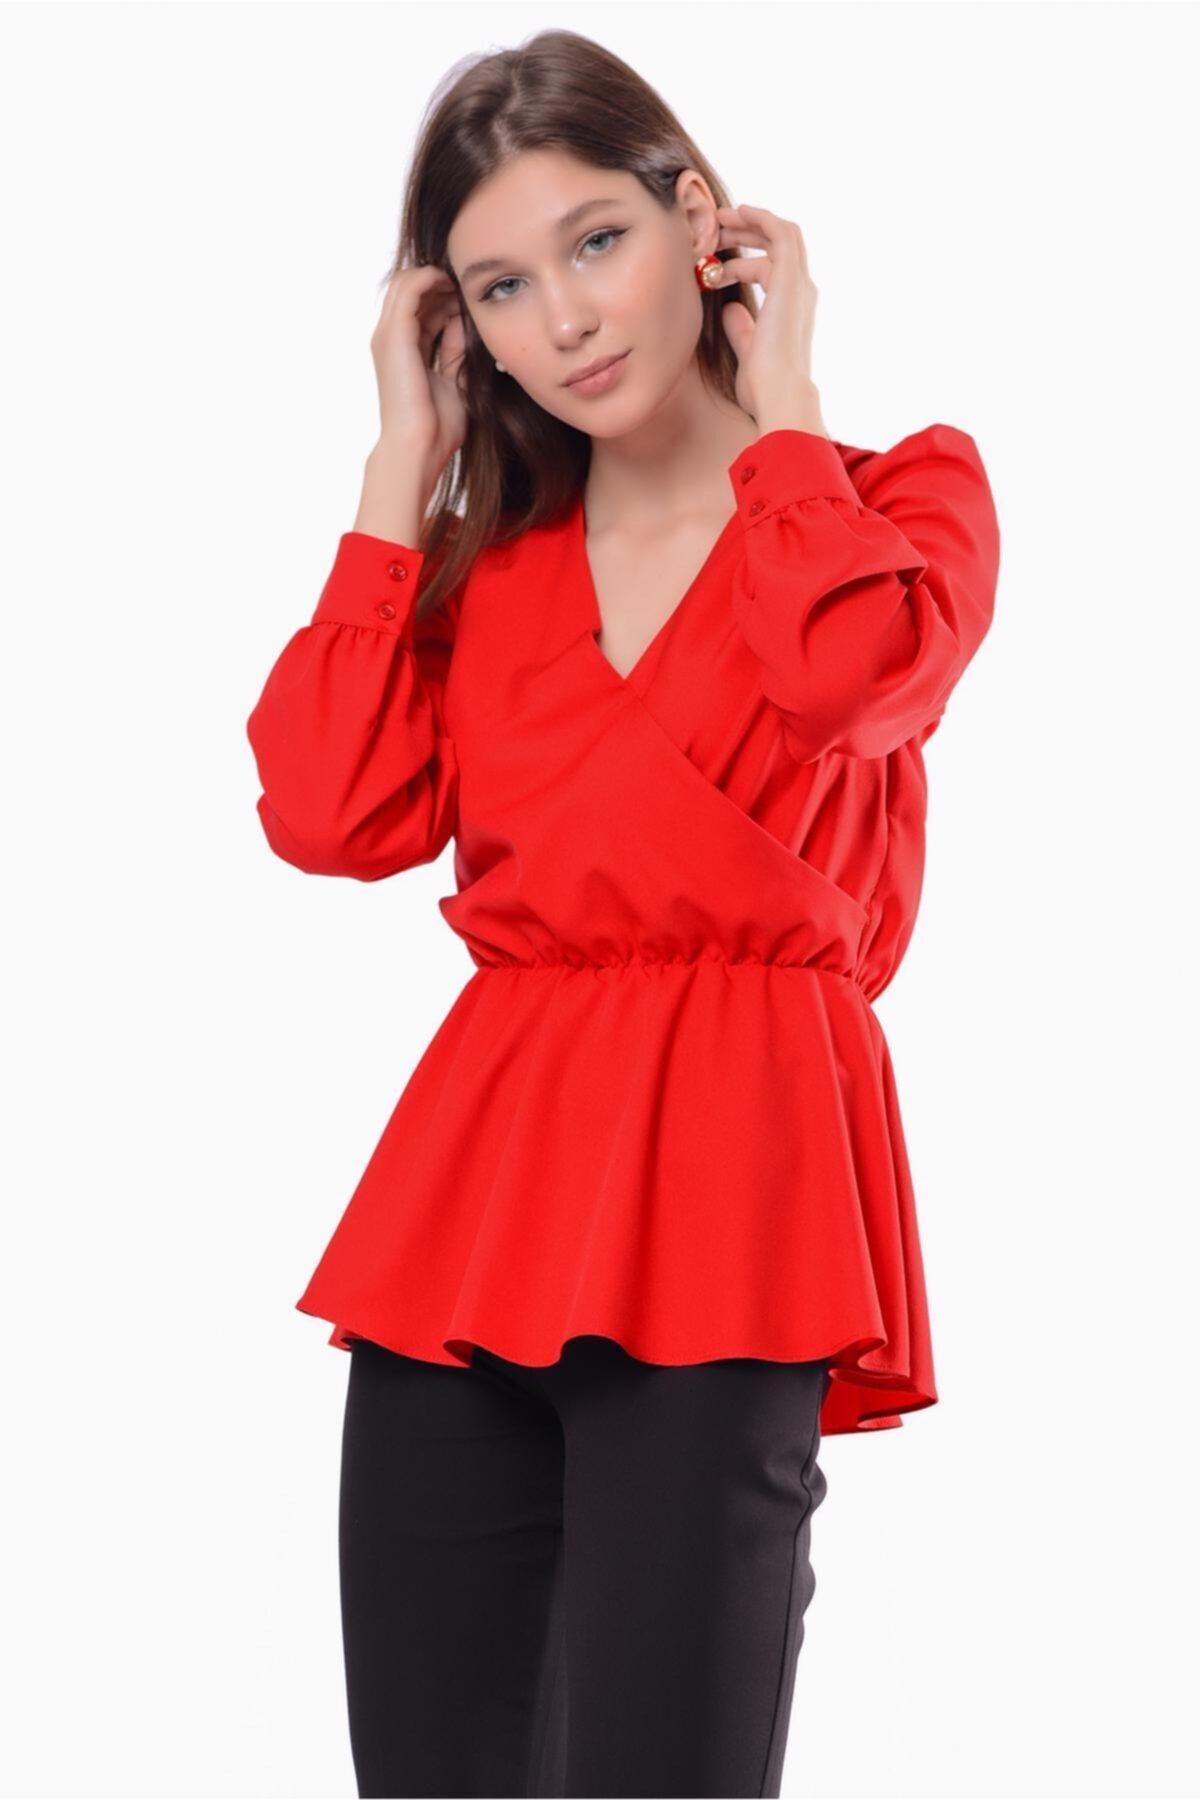 İroni Kadın Kırmızı Kruvaze Bluz 3003-903